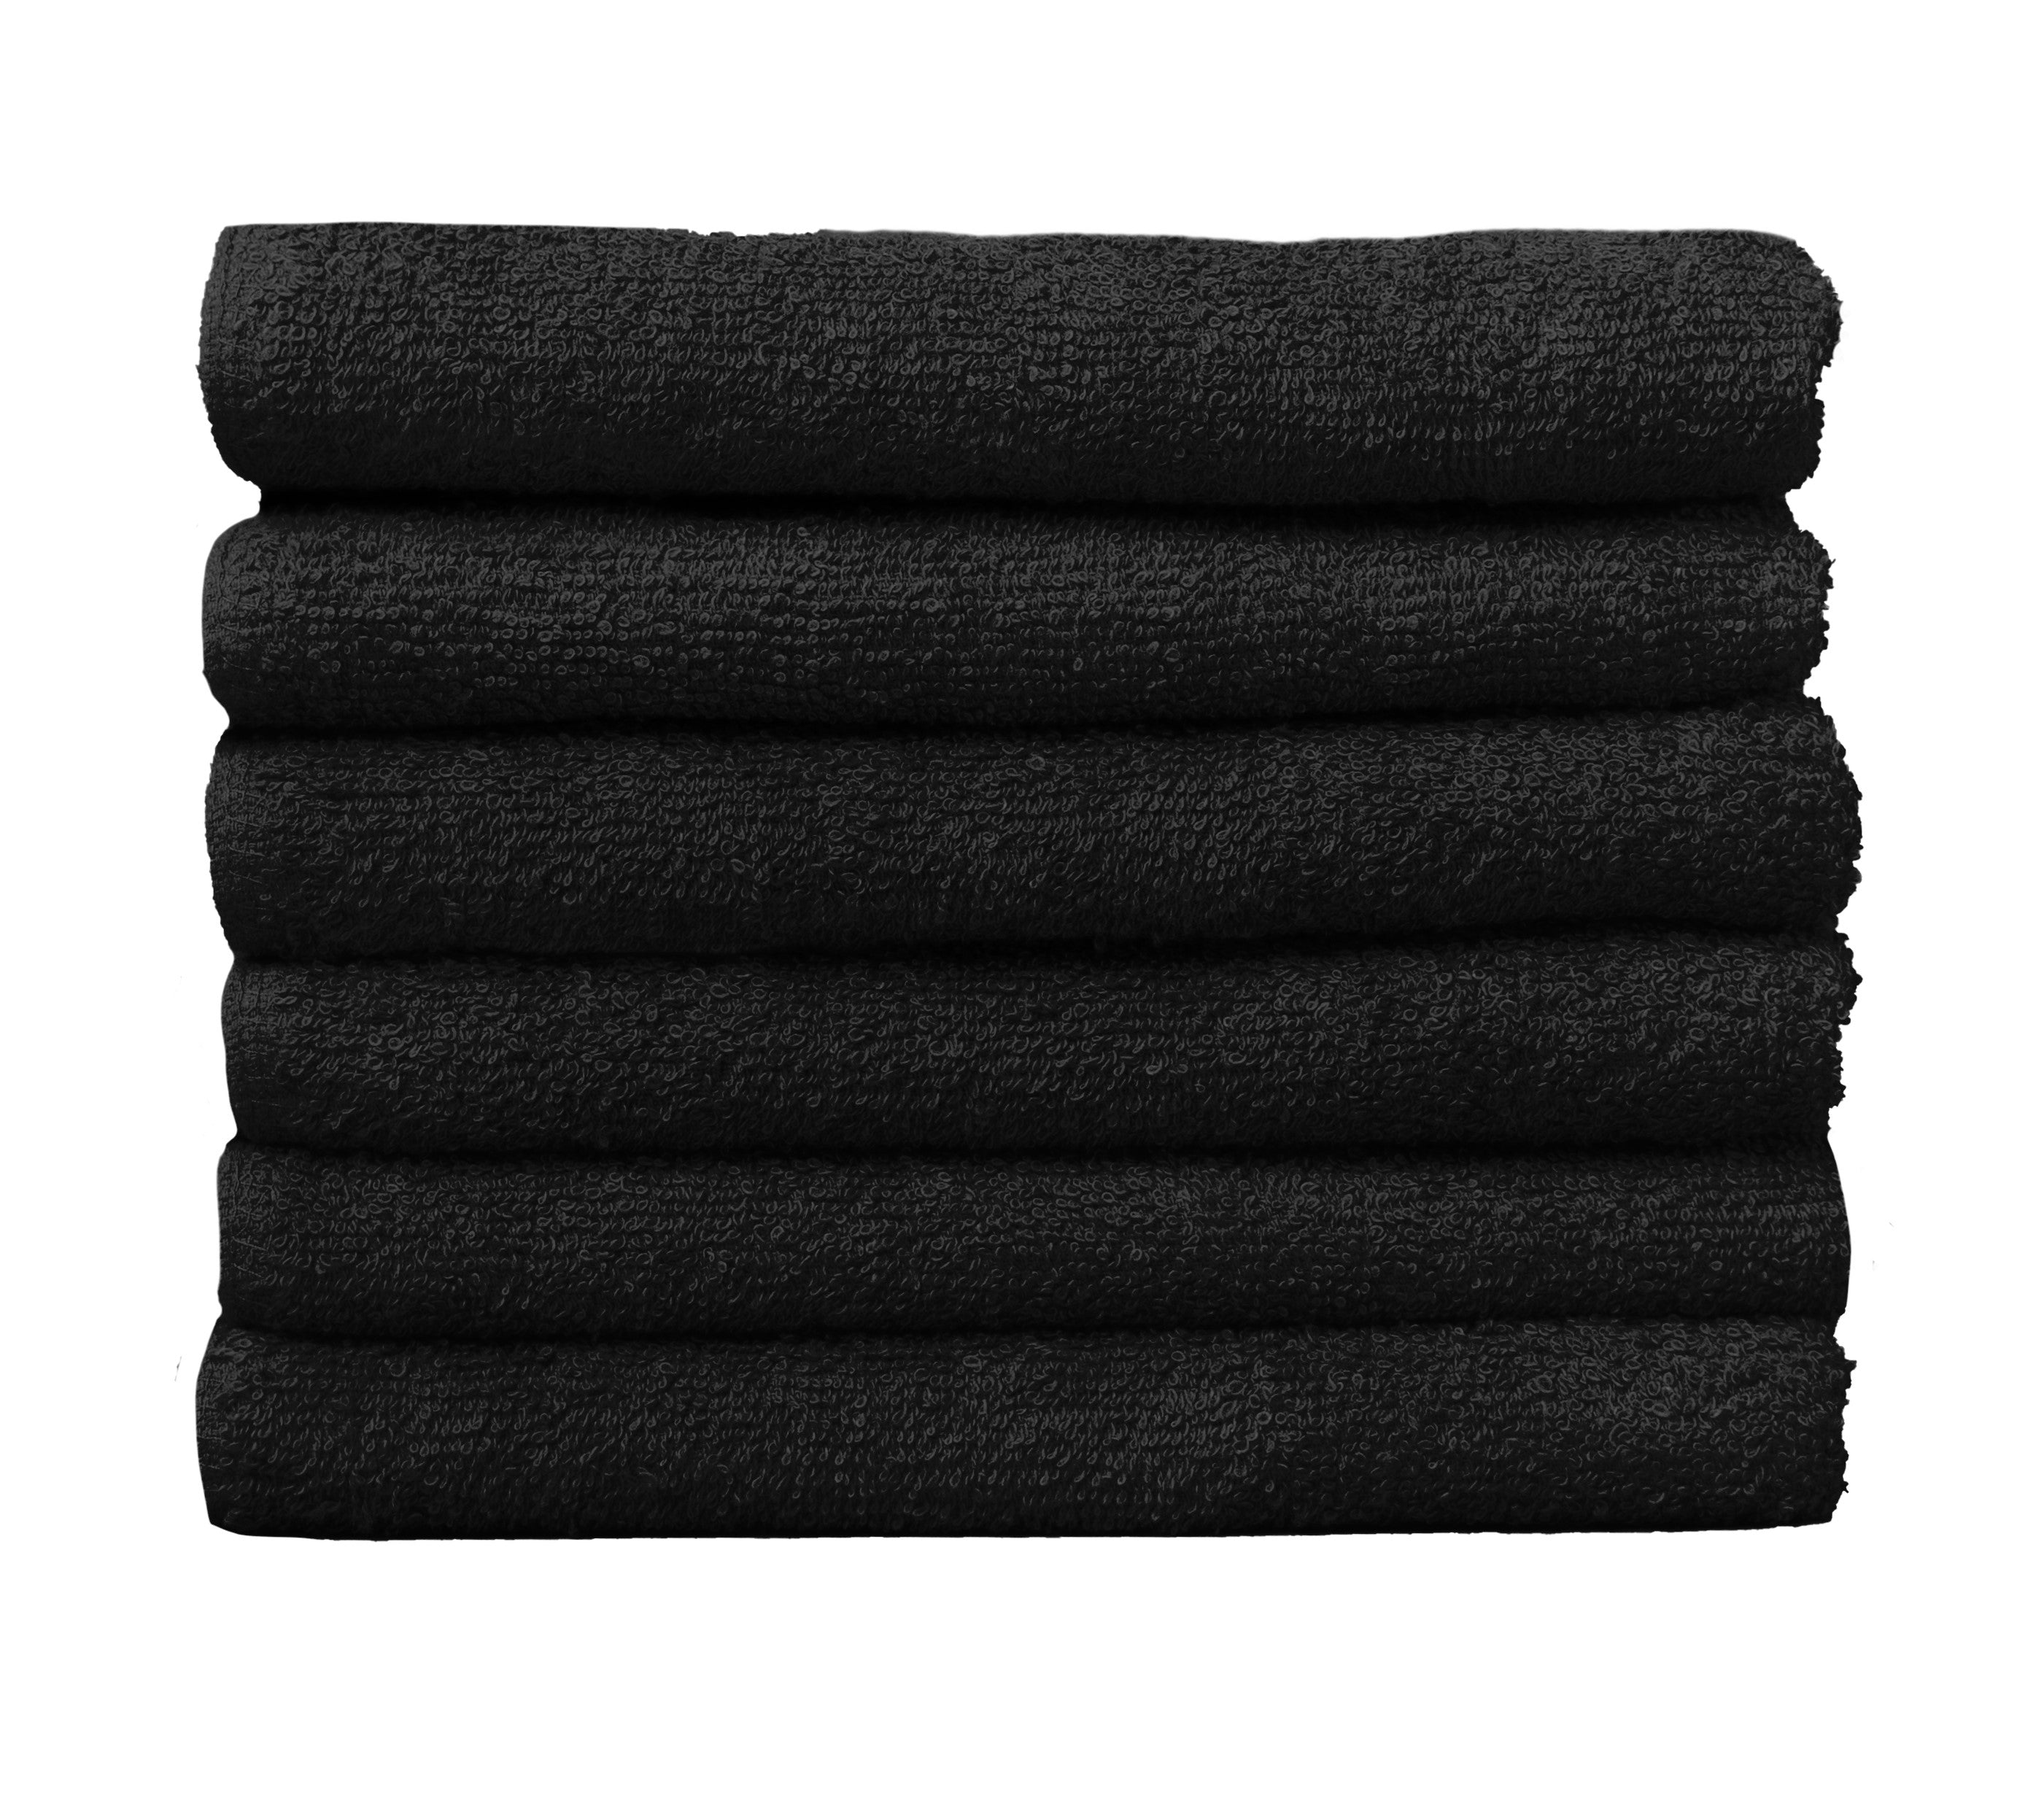 Shop Quality Bleach-Proof Towels, Bulk